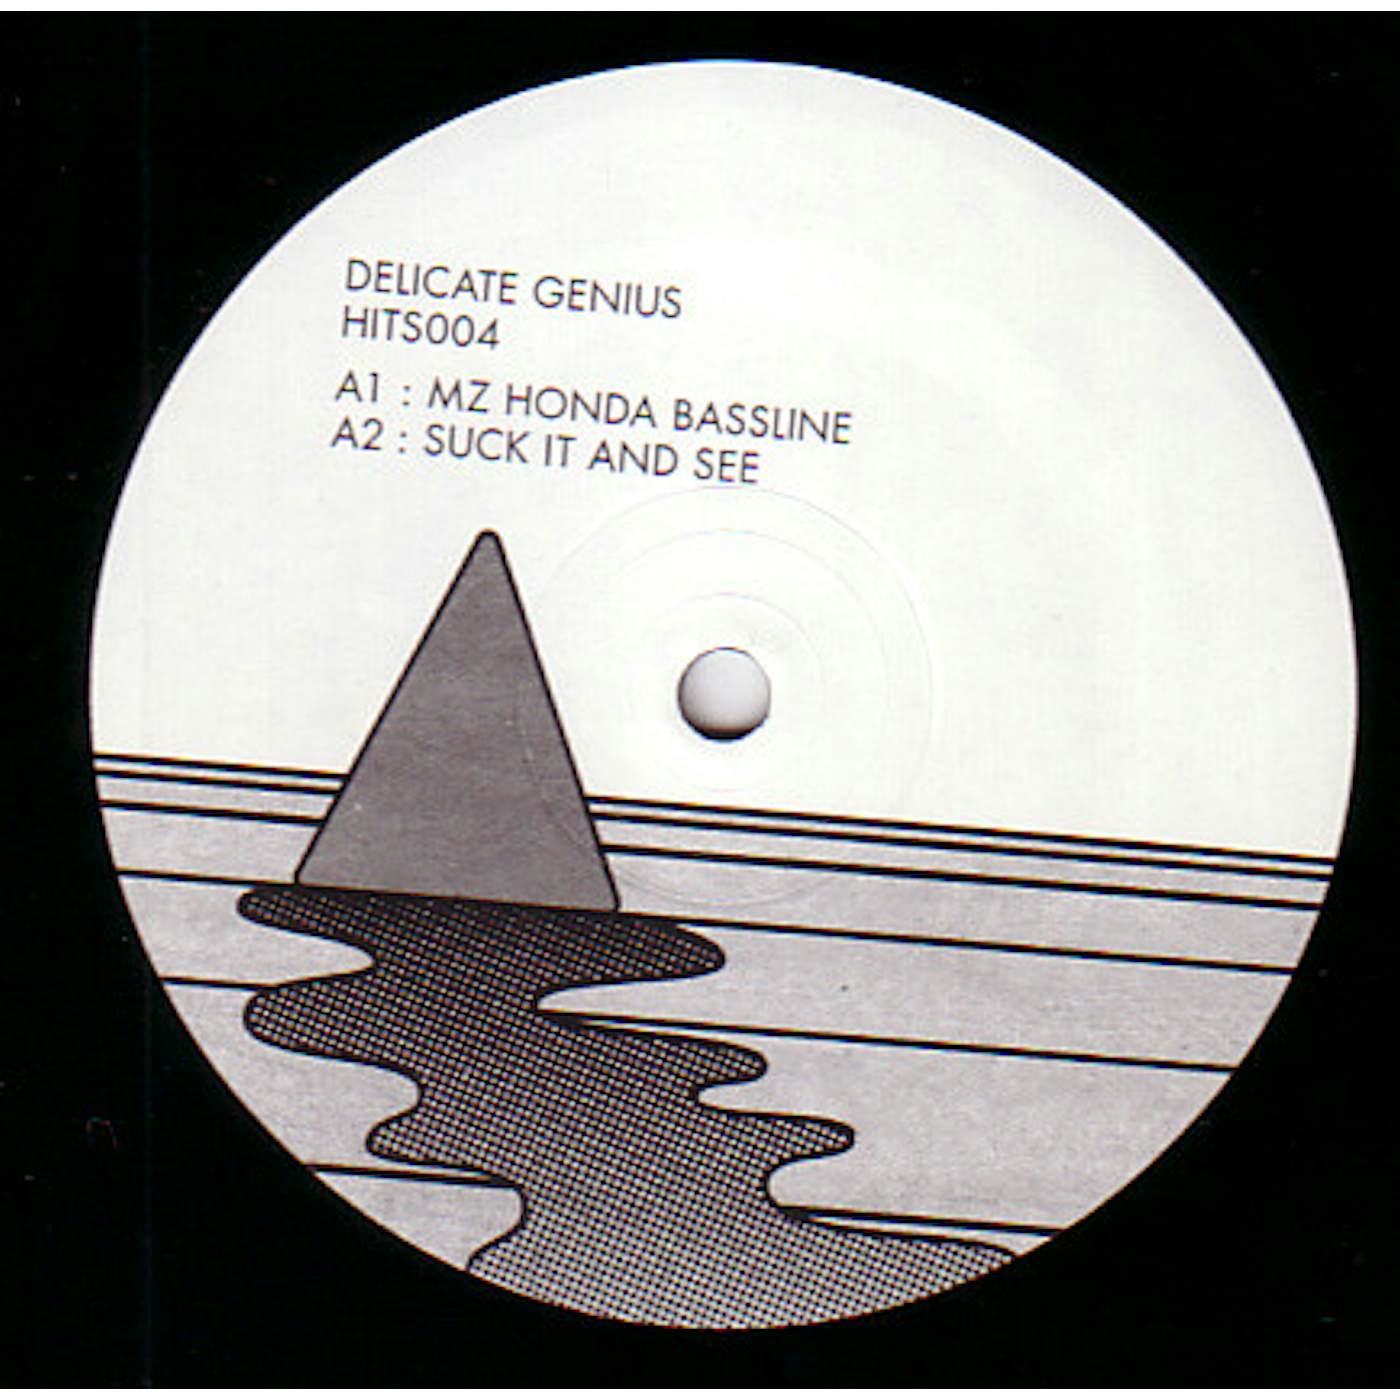 The Delicate Genius Vinyl Record